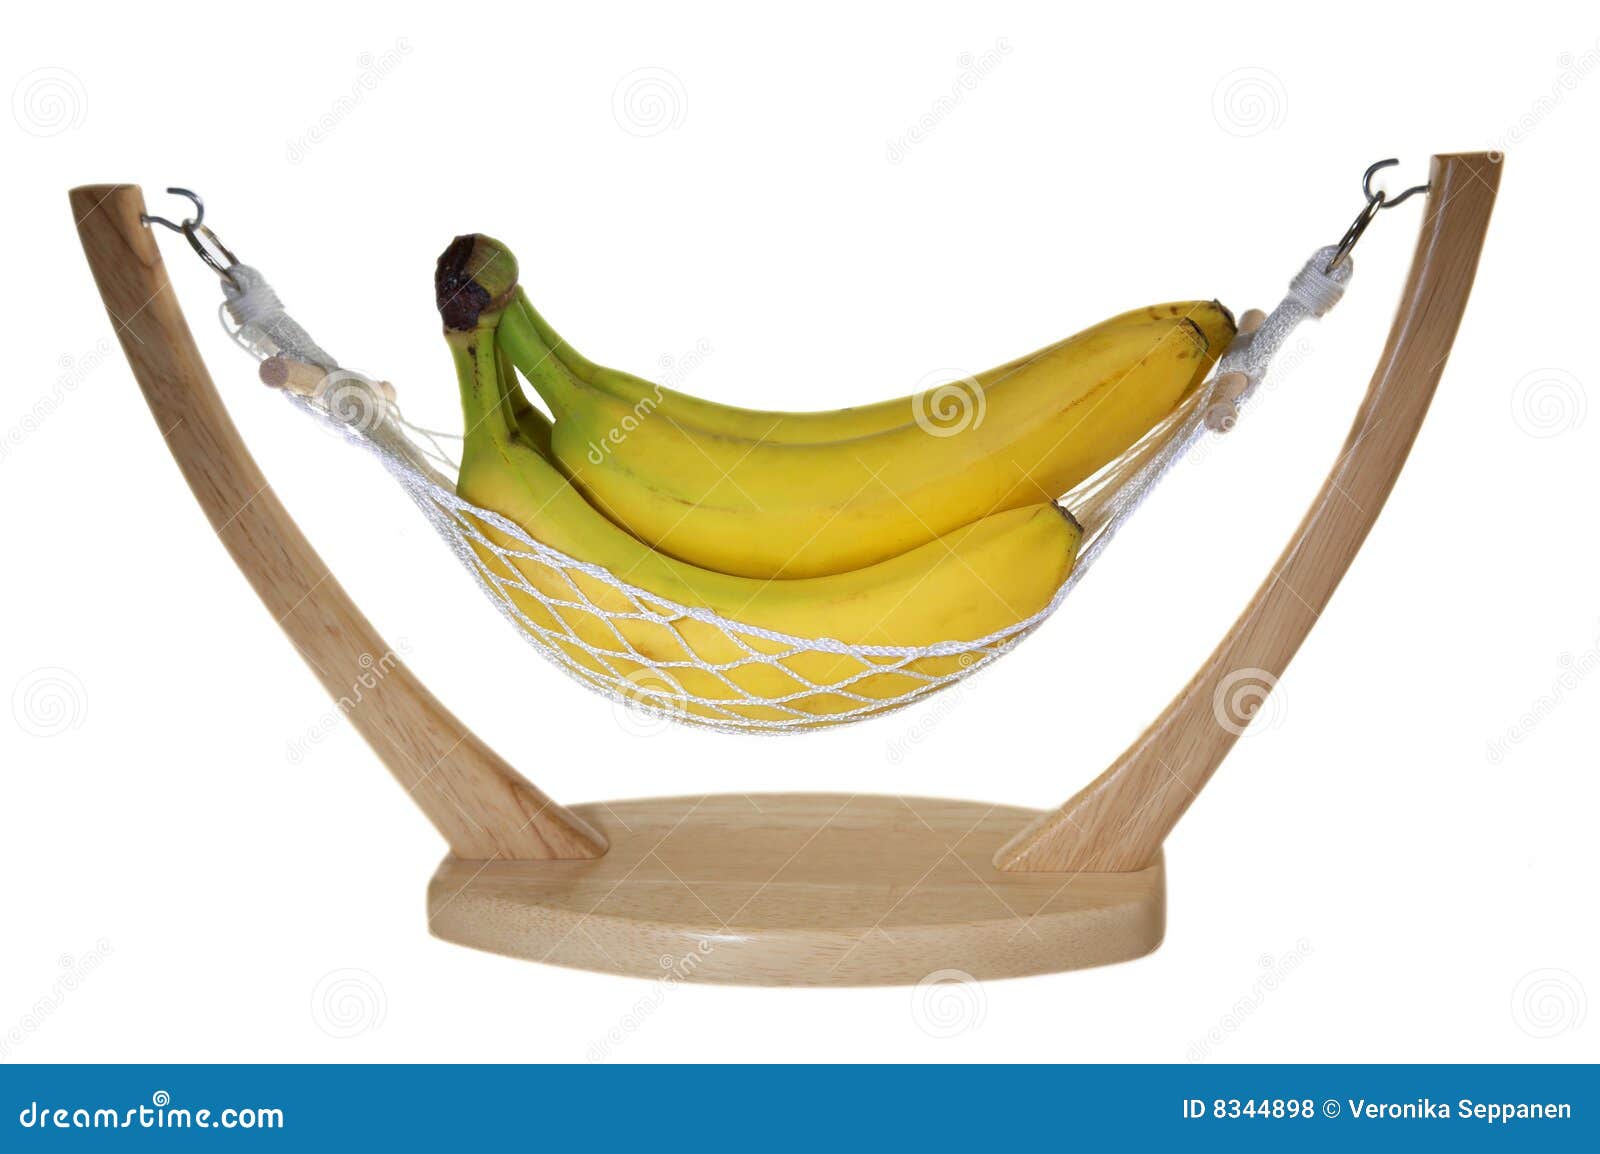 bob bully recommends Images Of A Banana Hammock